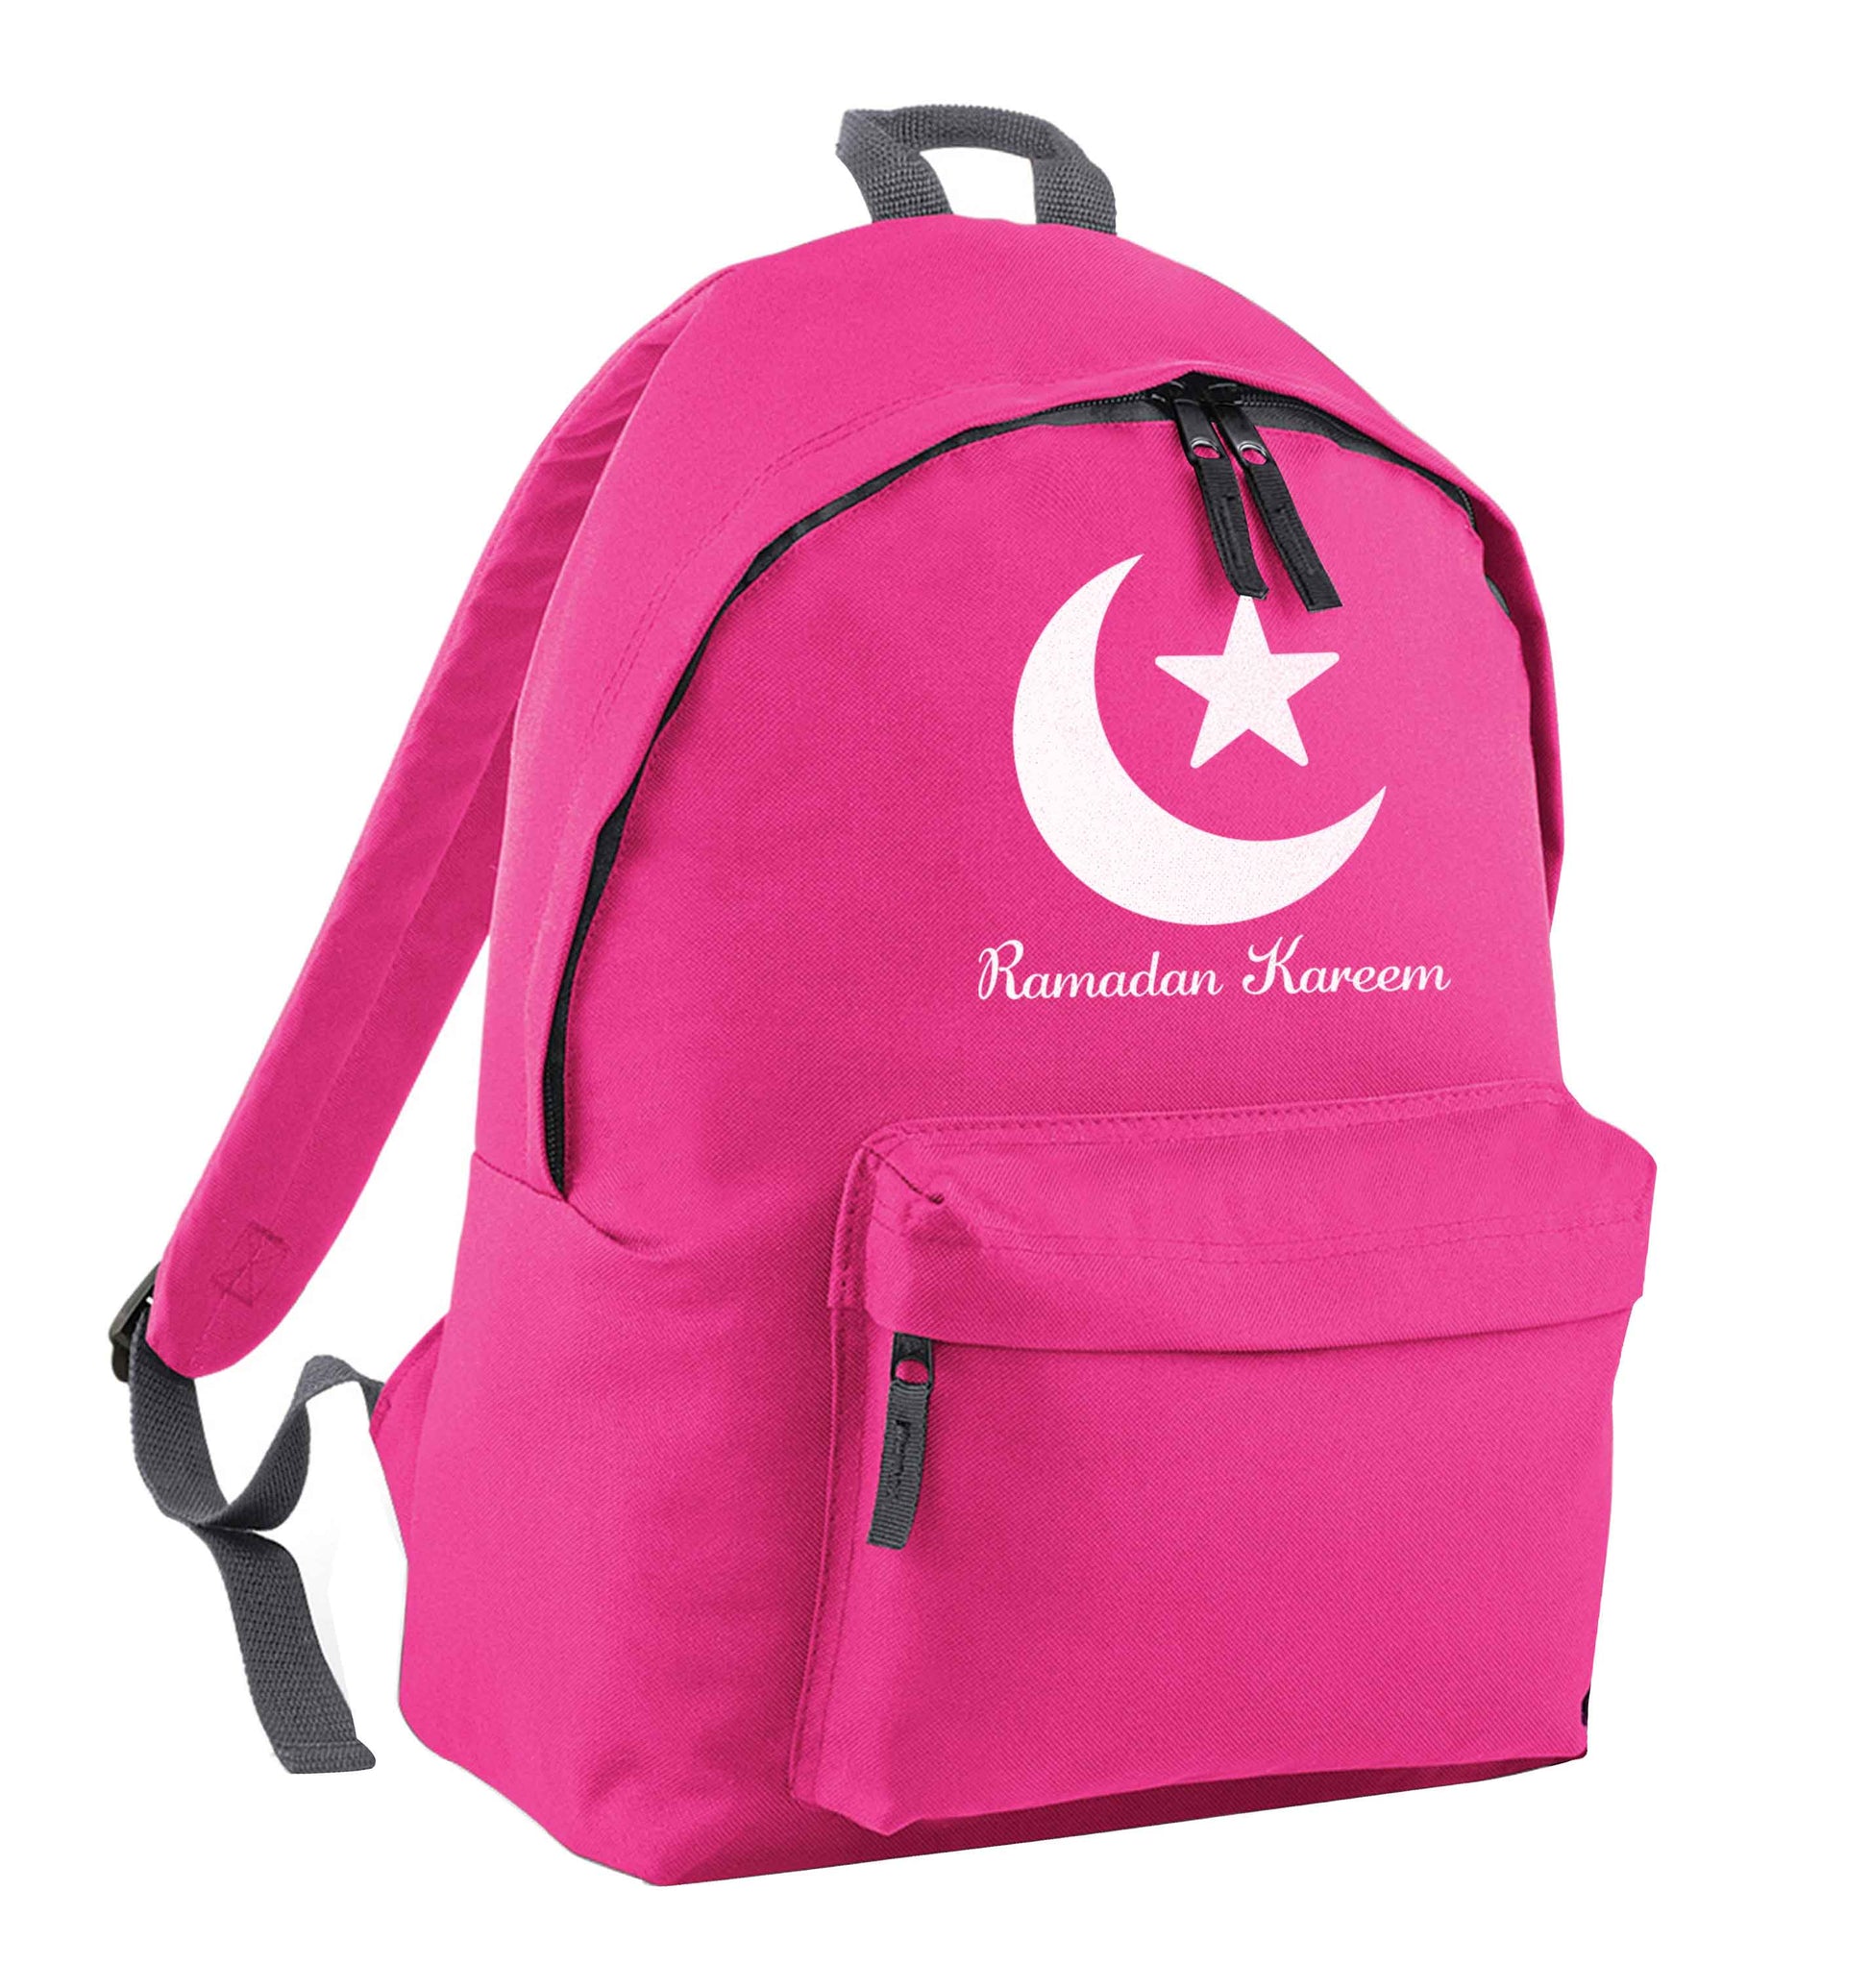 Ramadan kareem pink children's backpack